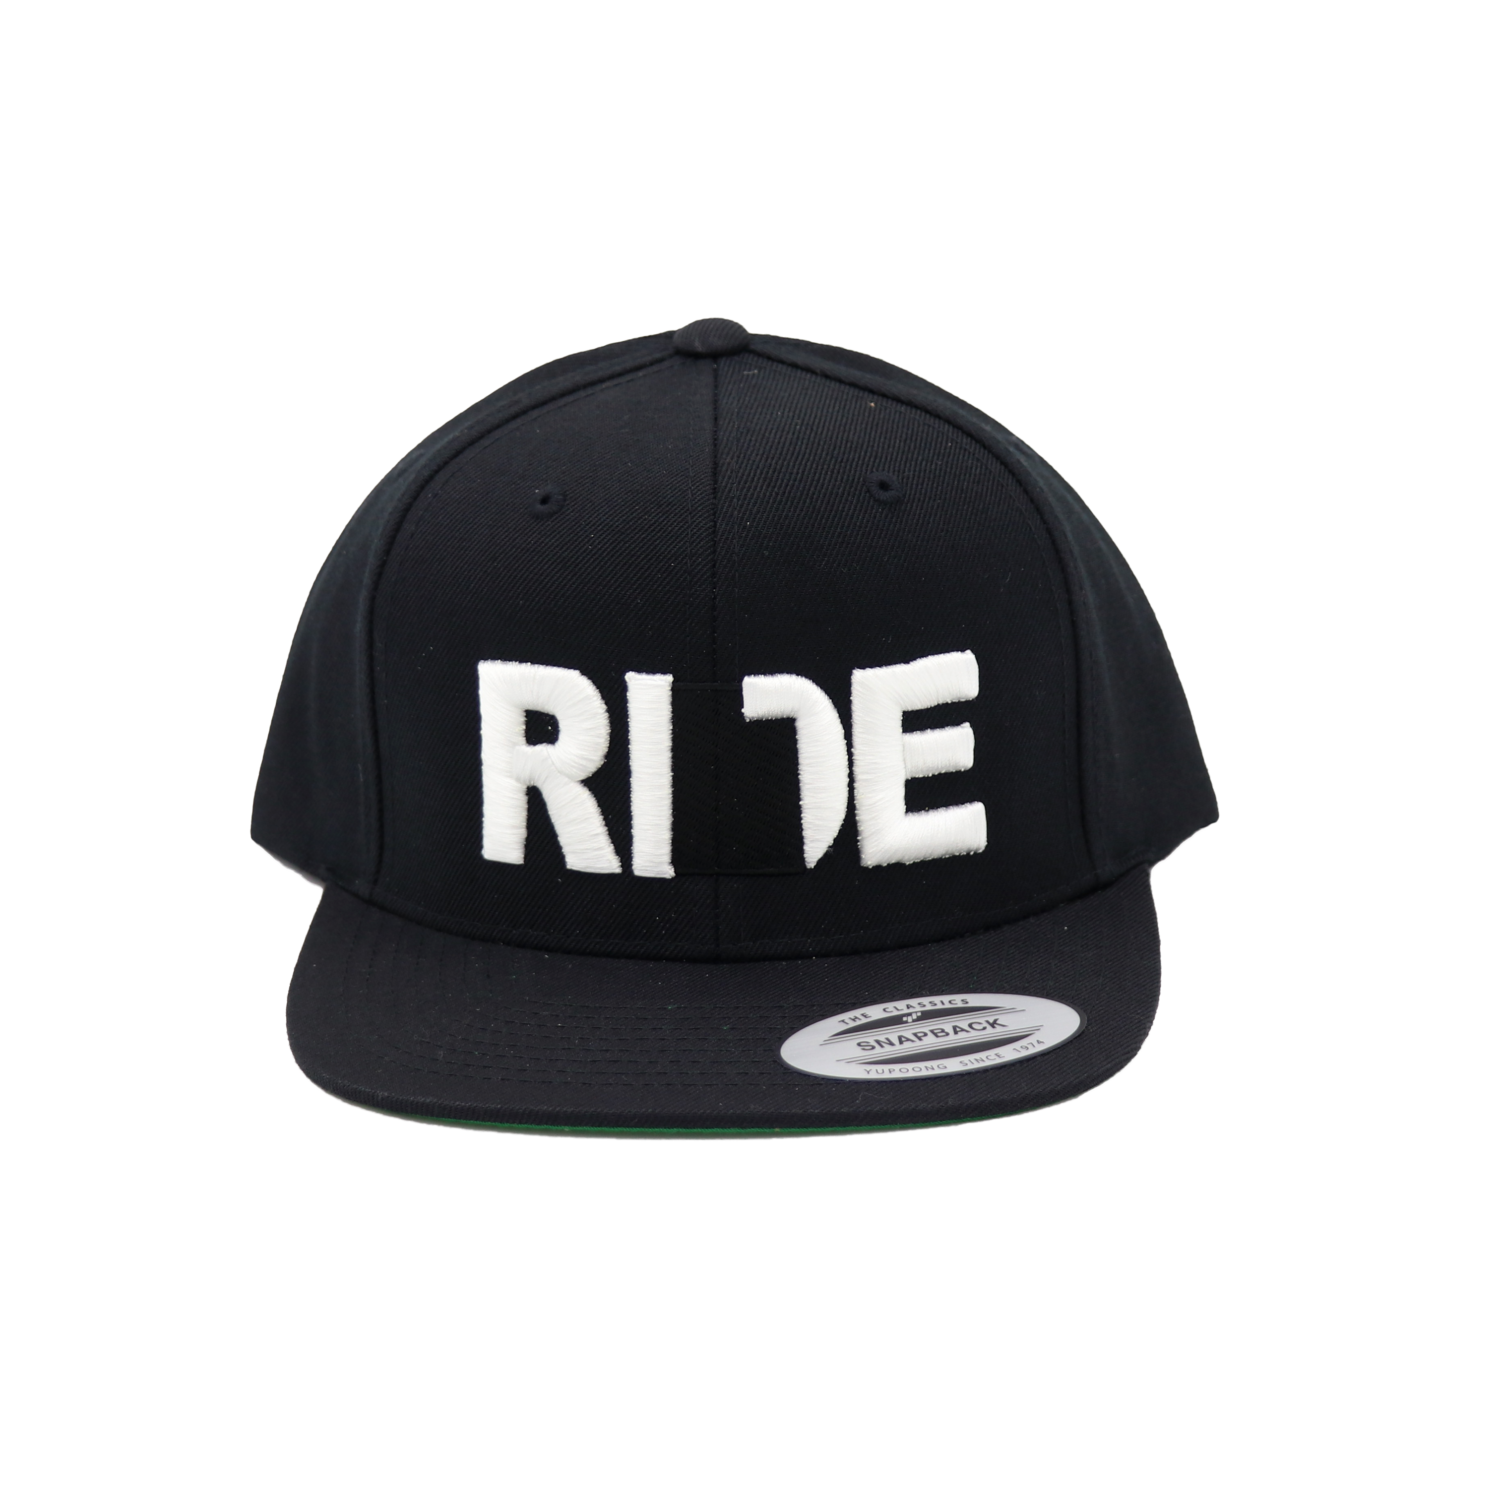 Ride Utah Hat Classic Pro 3D Puff Embroidered Snapback Flat Brim Hat Black